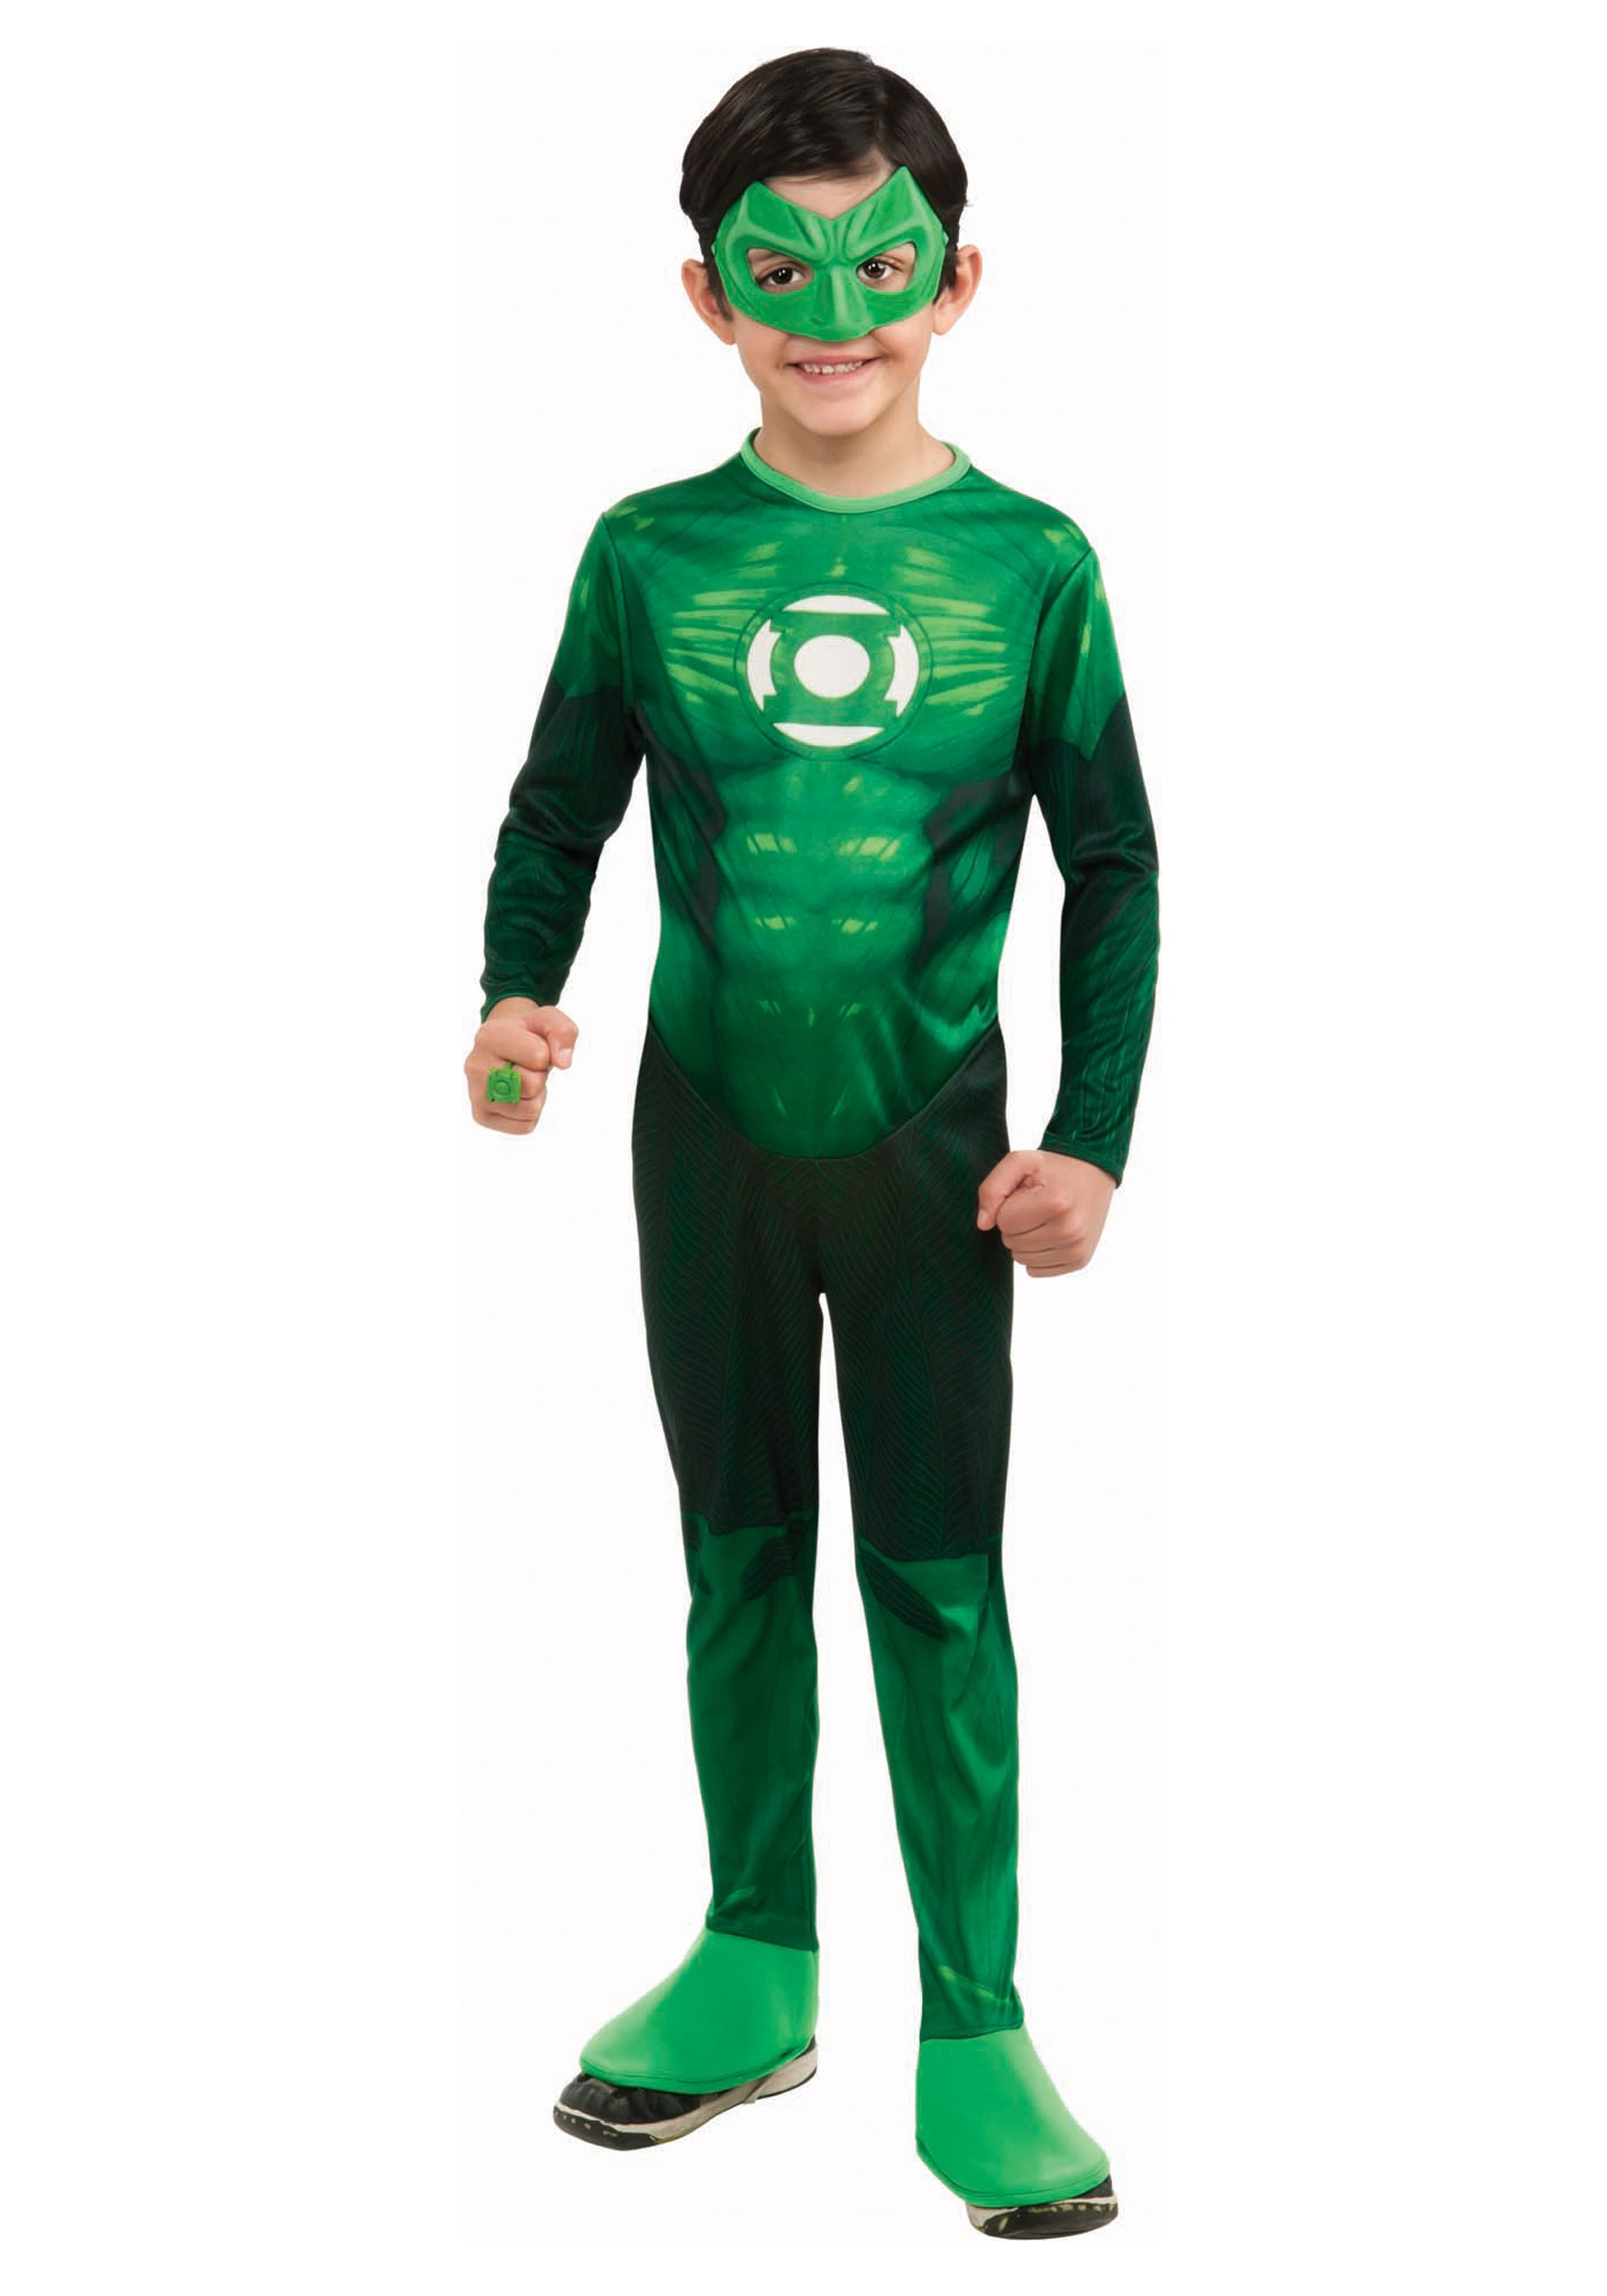 Kids Deluxe Green Lantern Costume